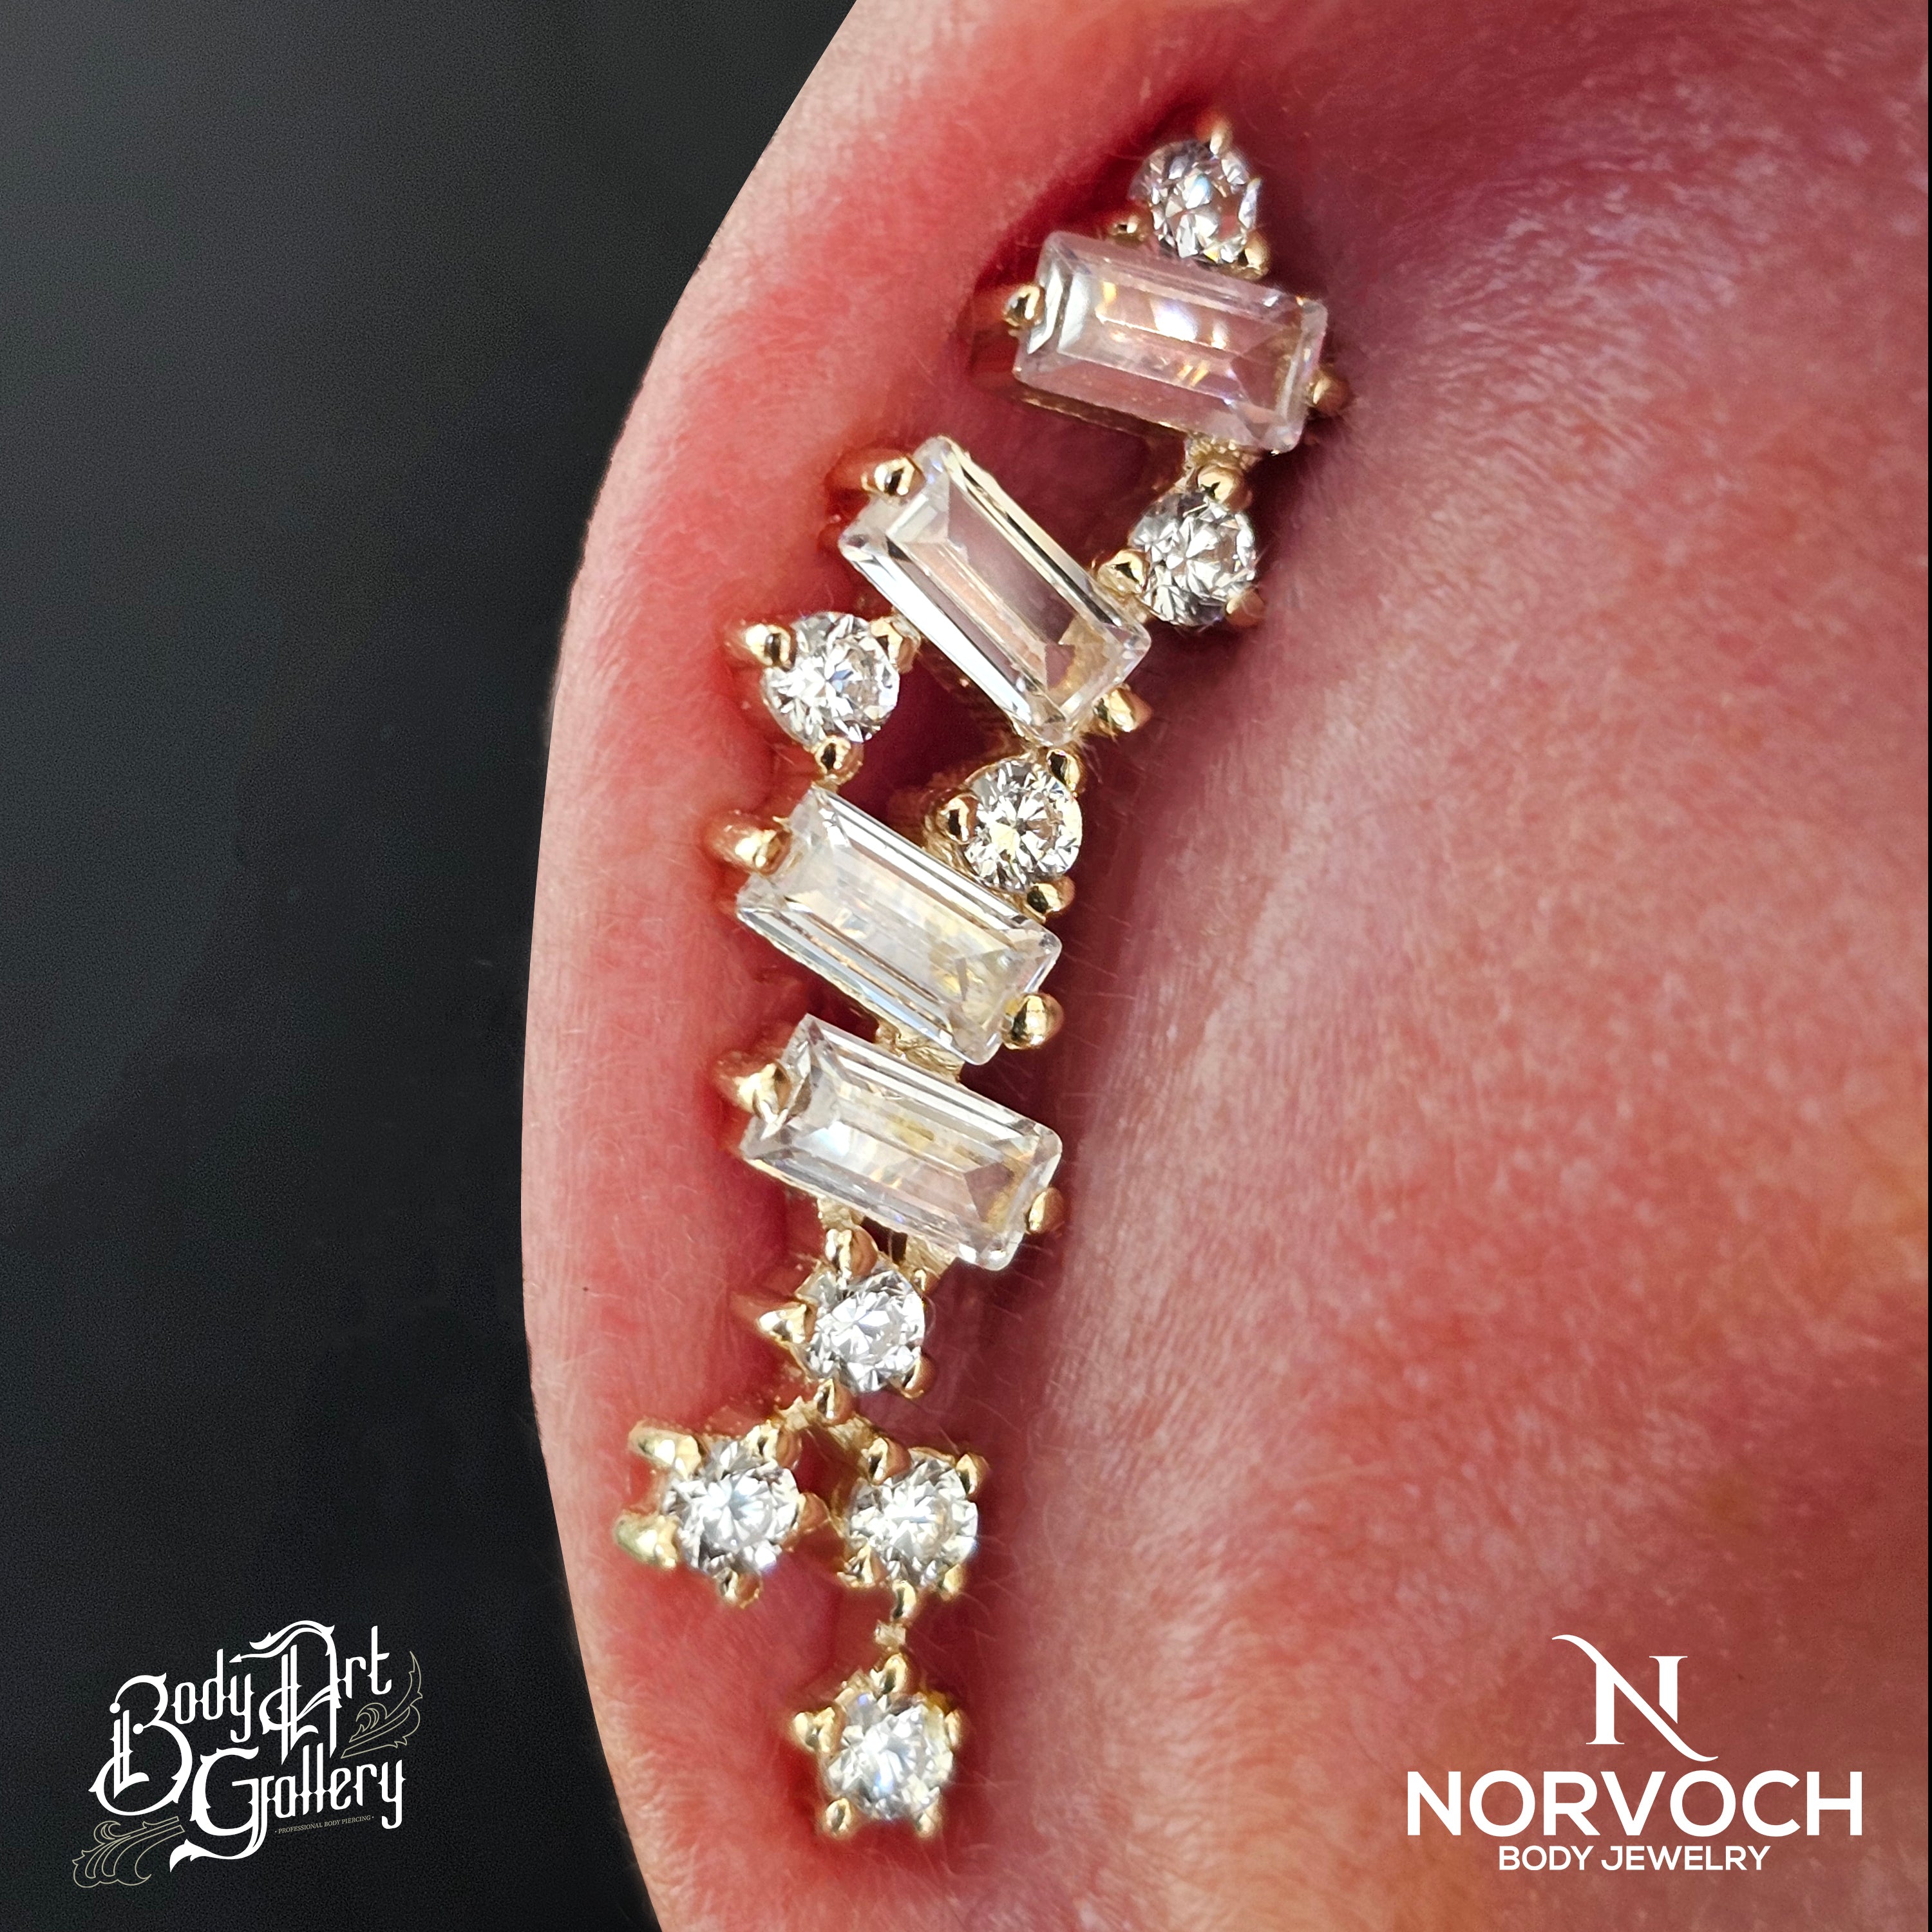 NorVoch Body Jewelry